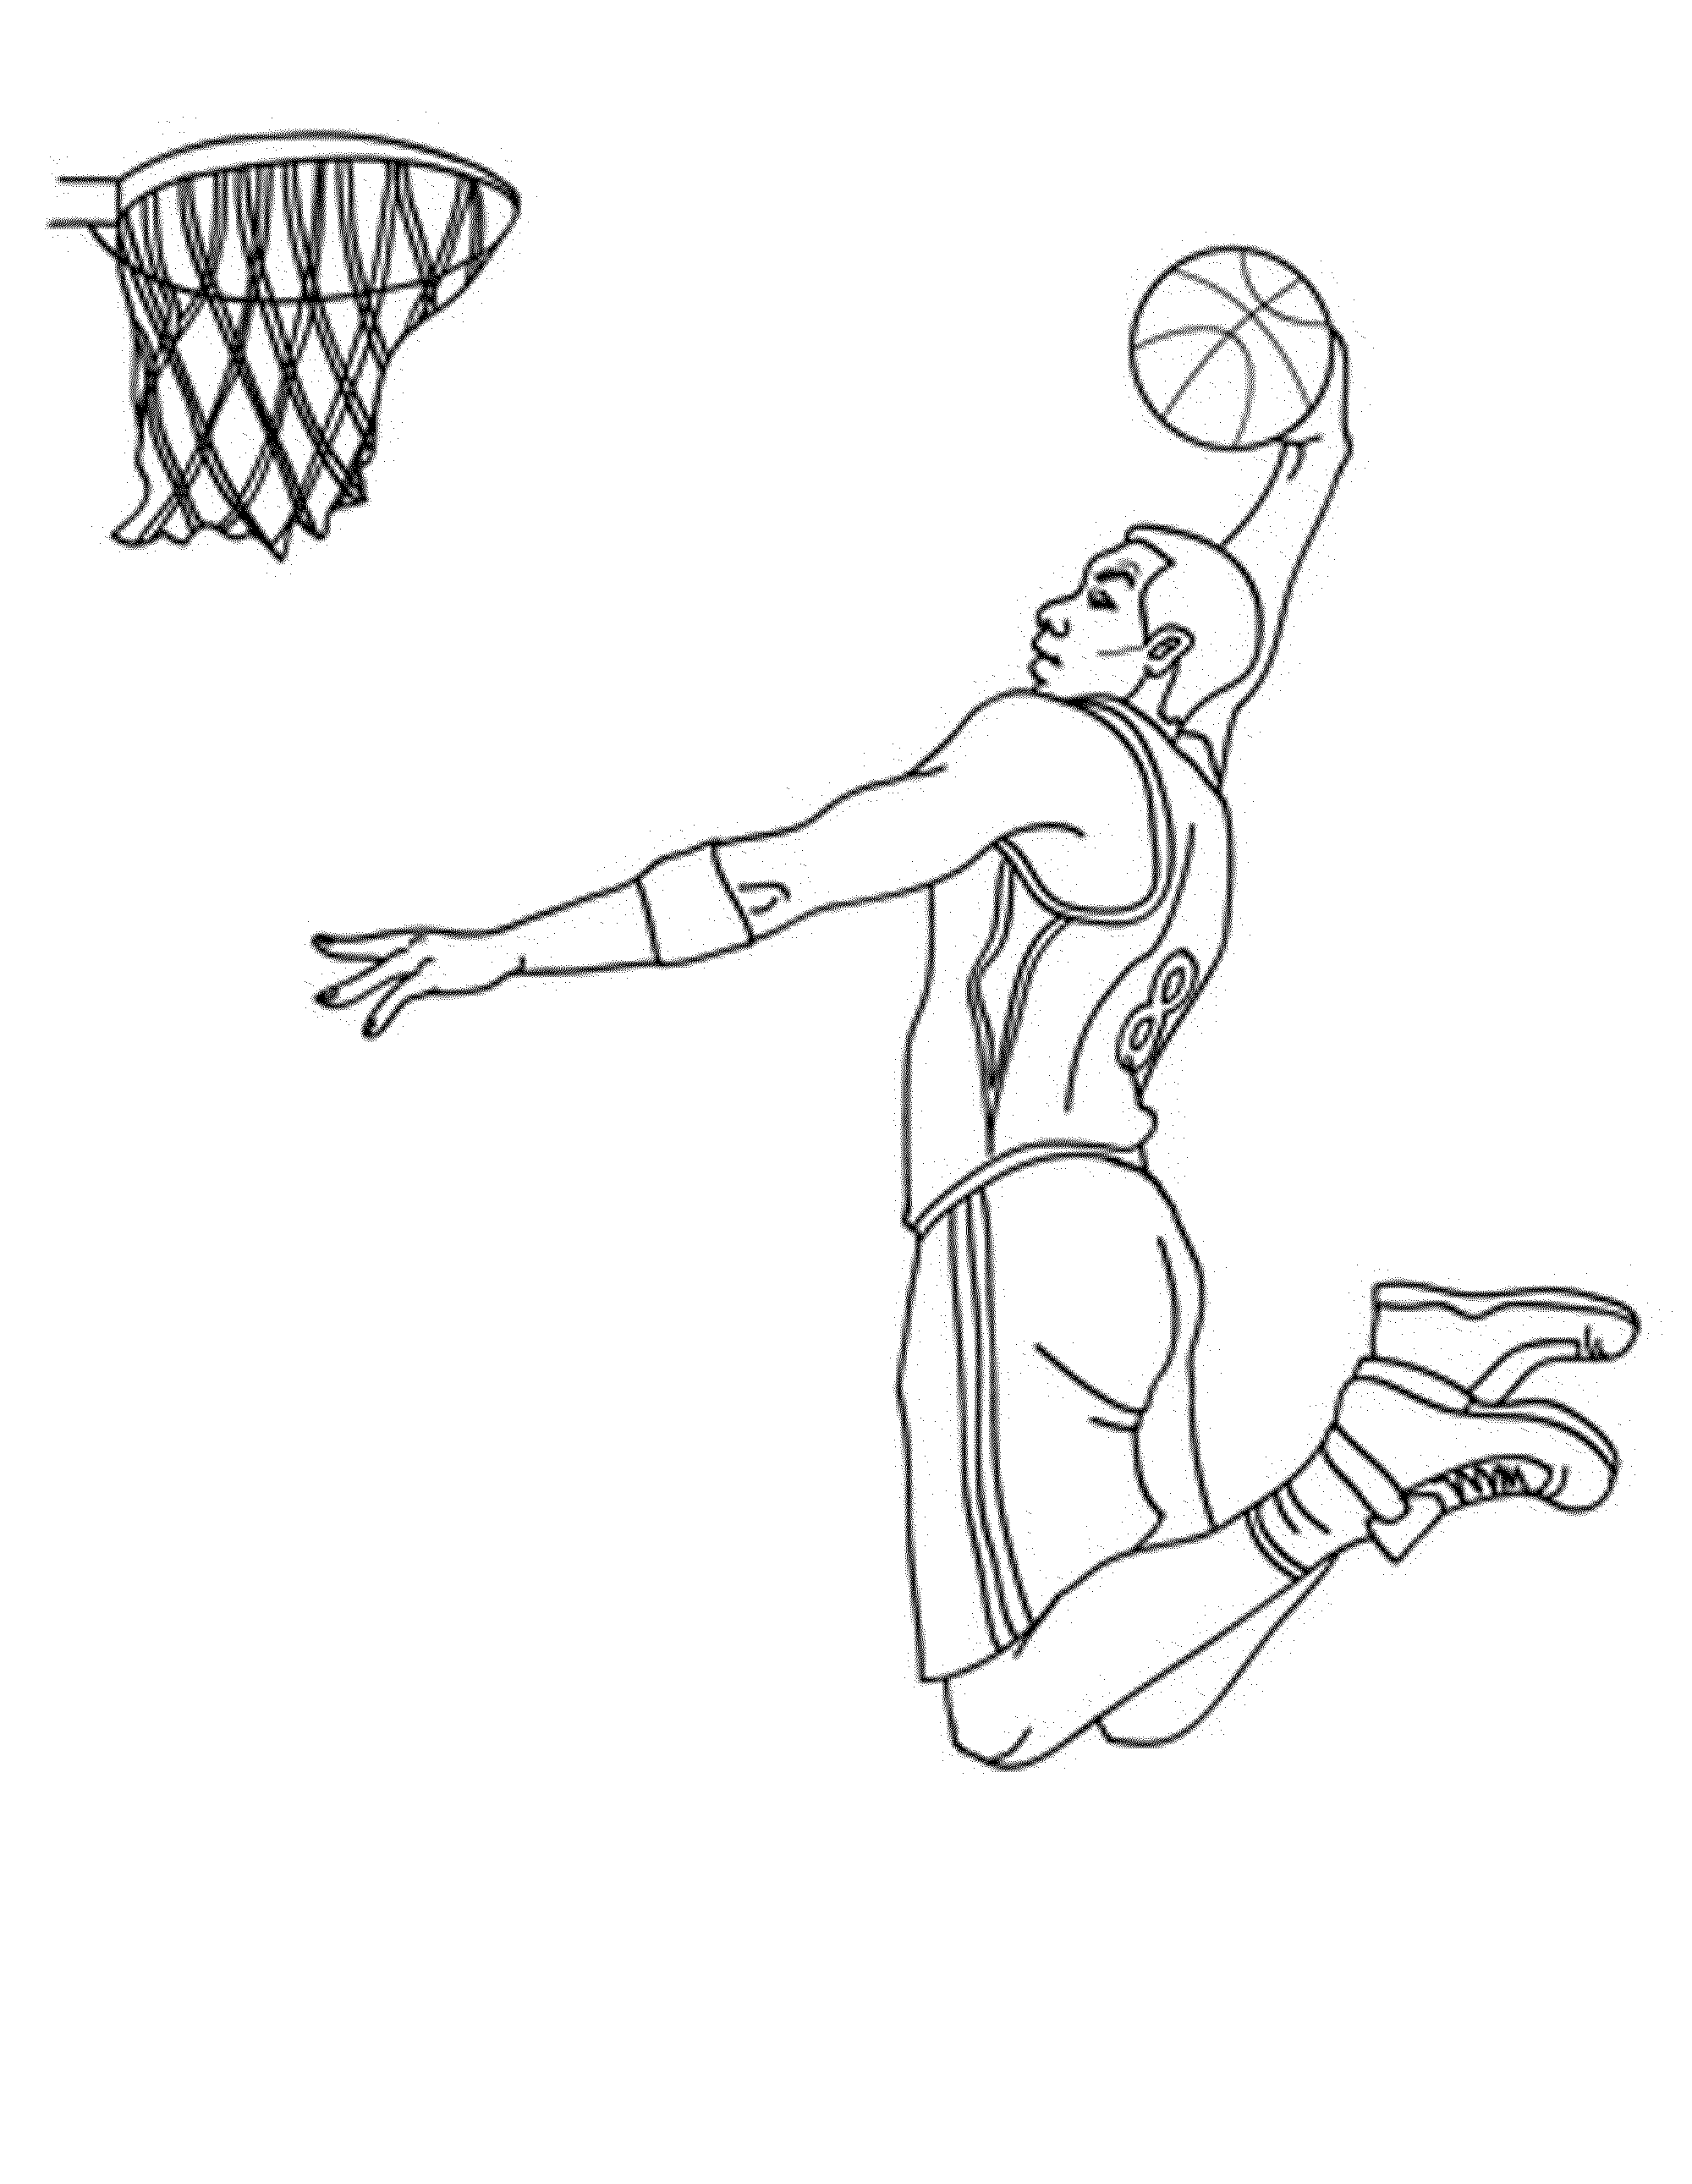 Image #17107 - Coloriage basketball gratuit